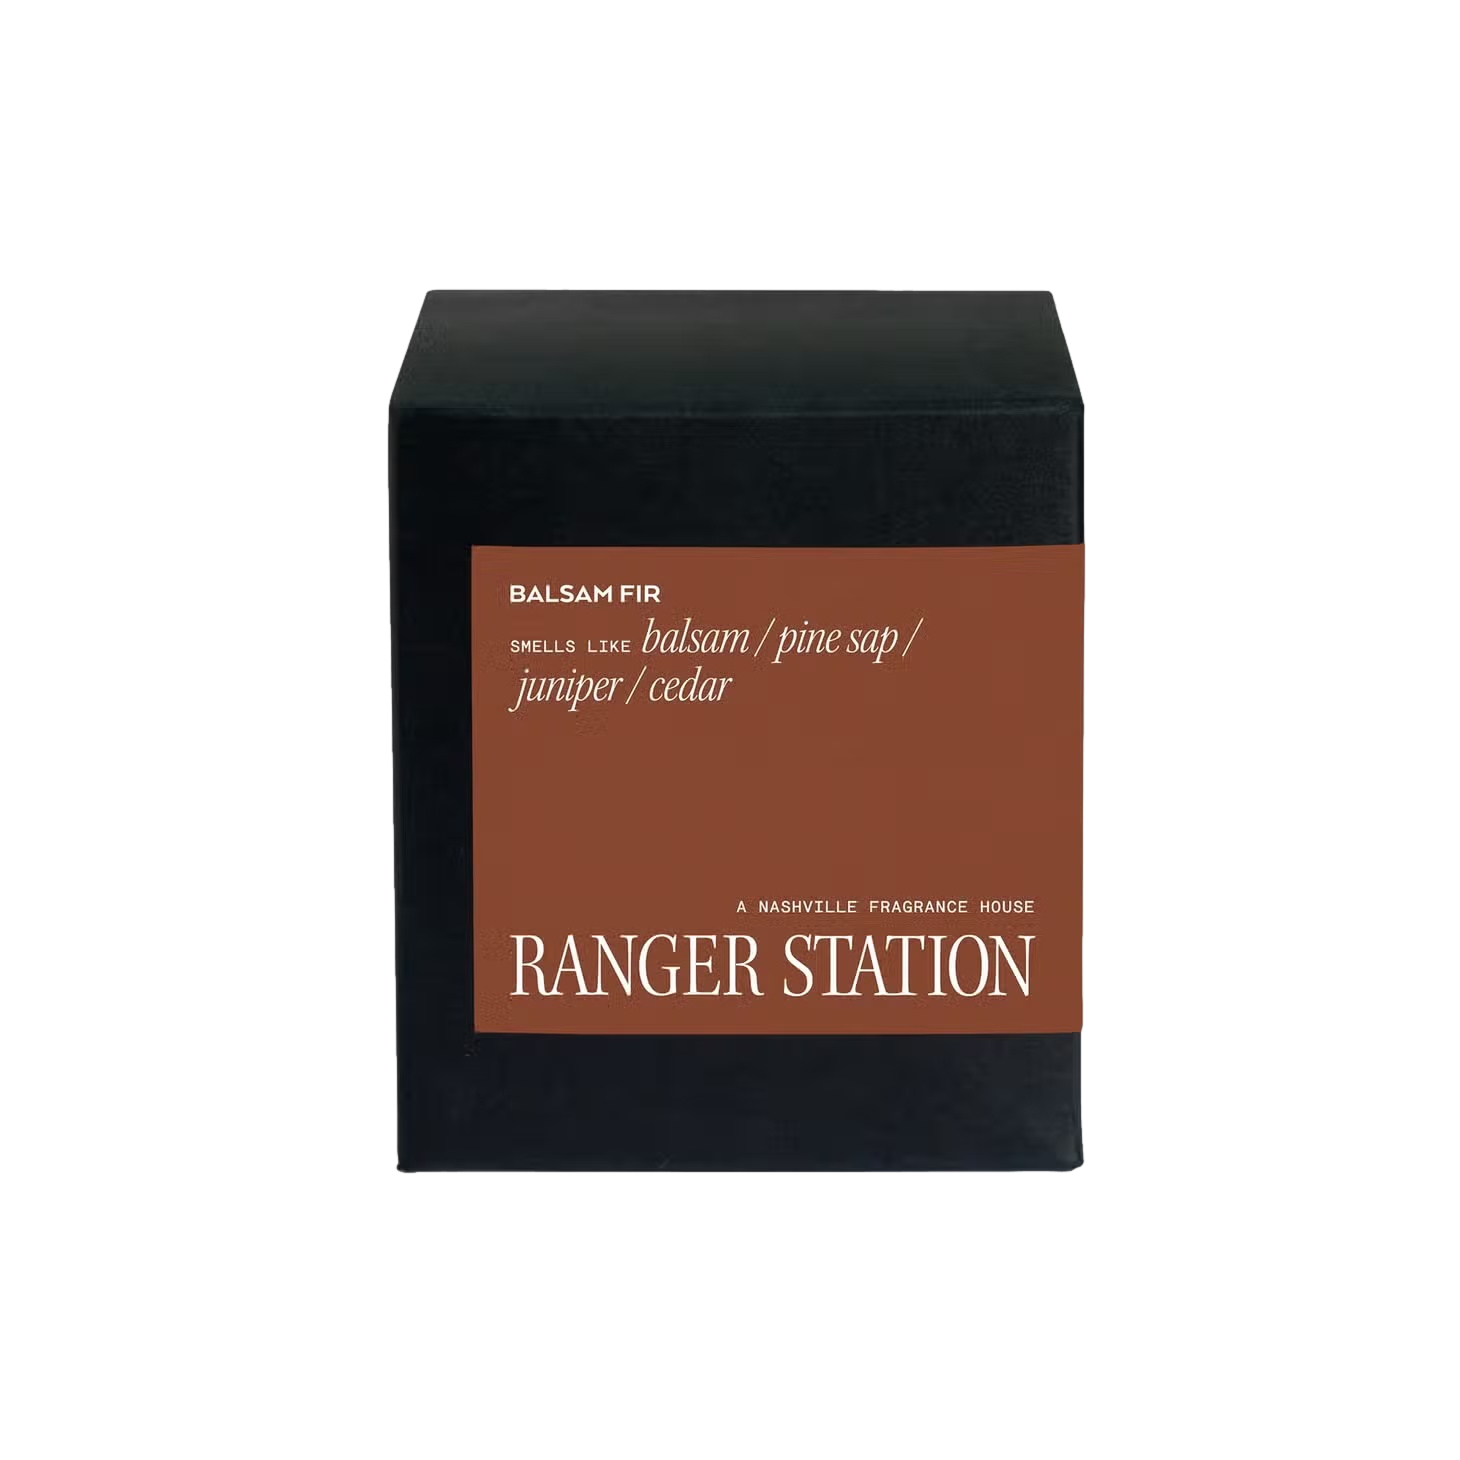 Balsam Fir Candle by Ranger Station